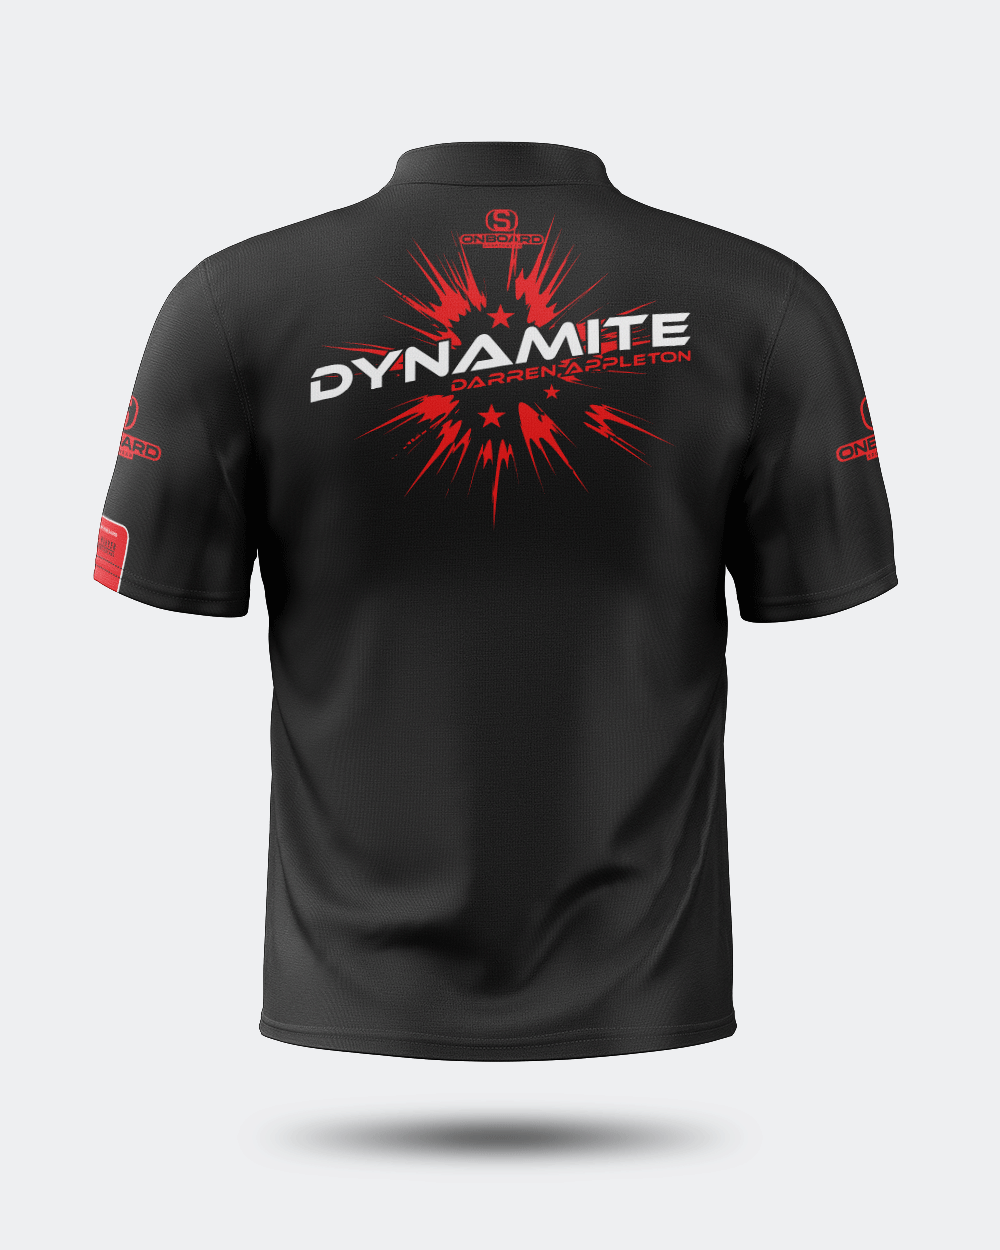 Dynamite Jersey